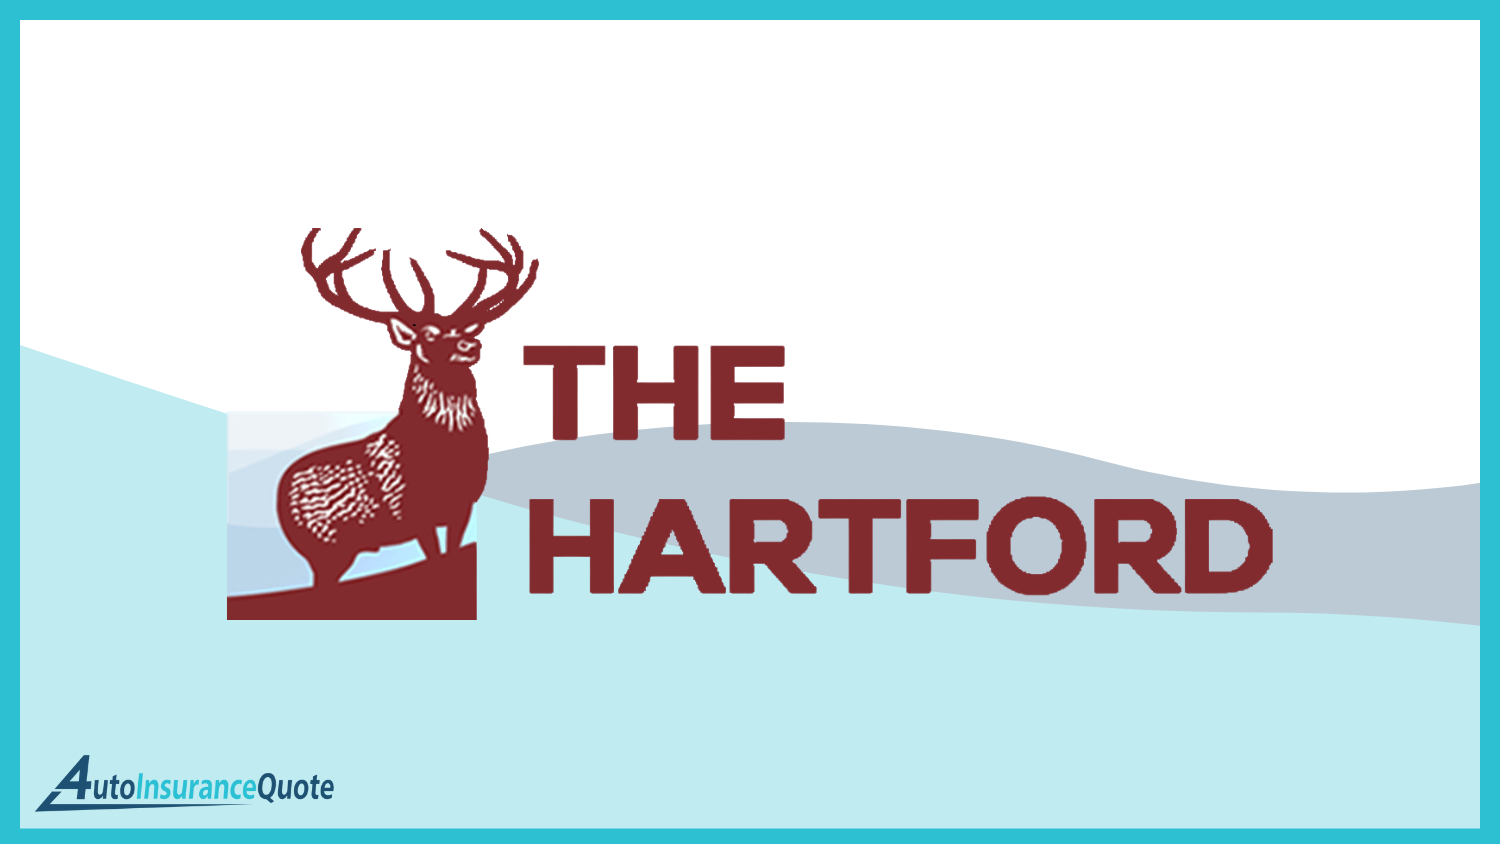 The Hartford: Best Auto Insurance Companies for Seniors